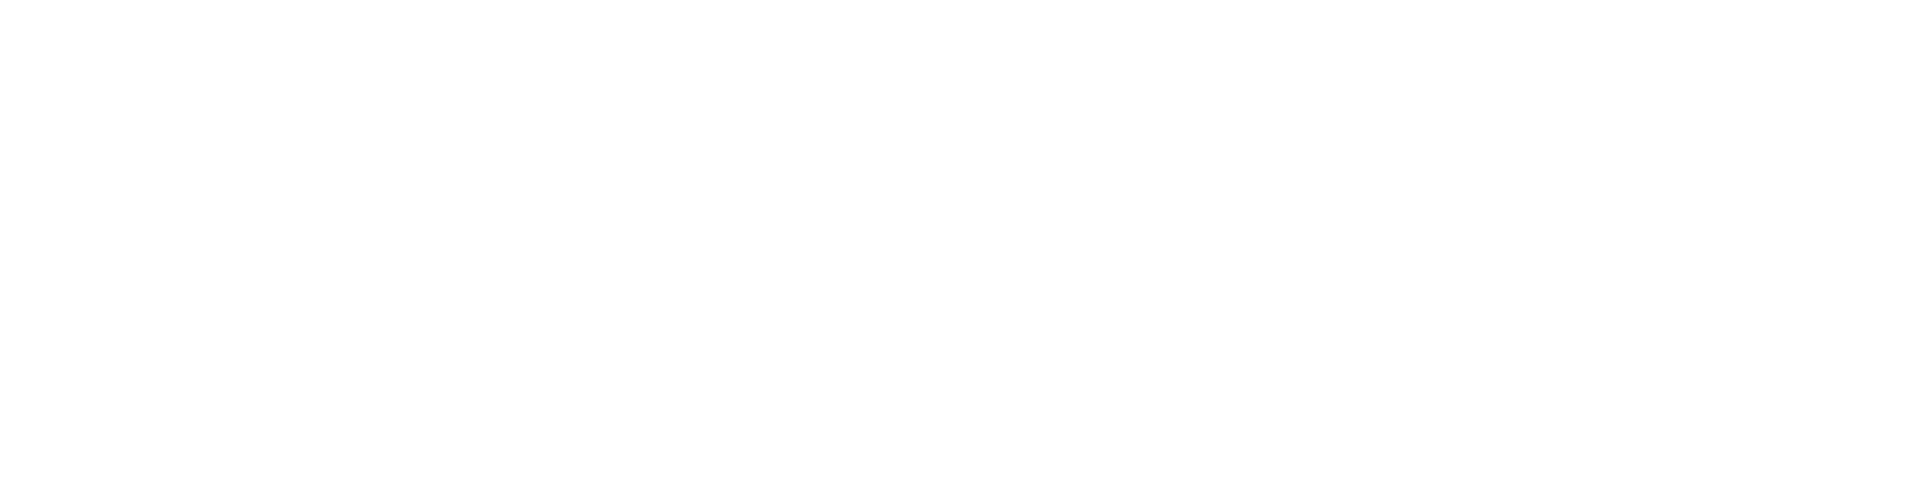 digital sustainability-logo white-orizzontale